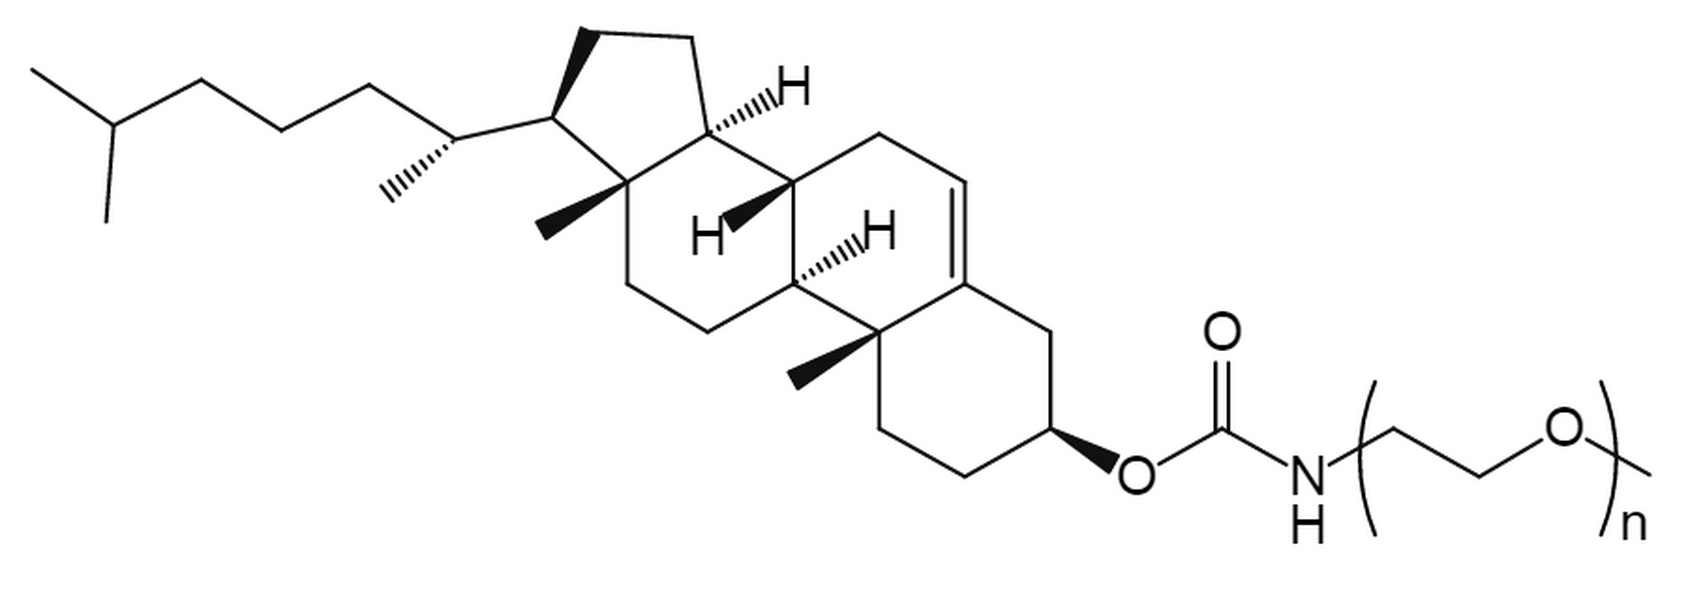 Cholesterol-PEG-methoxy, MW 2K